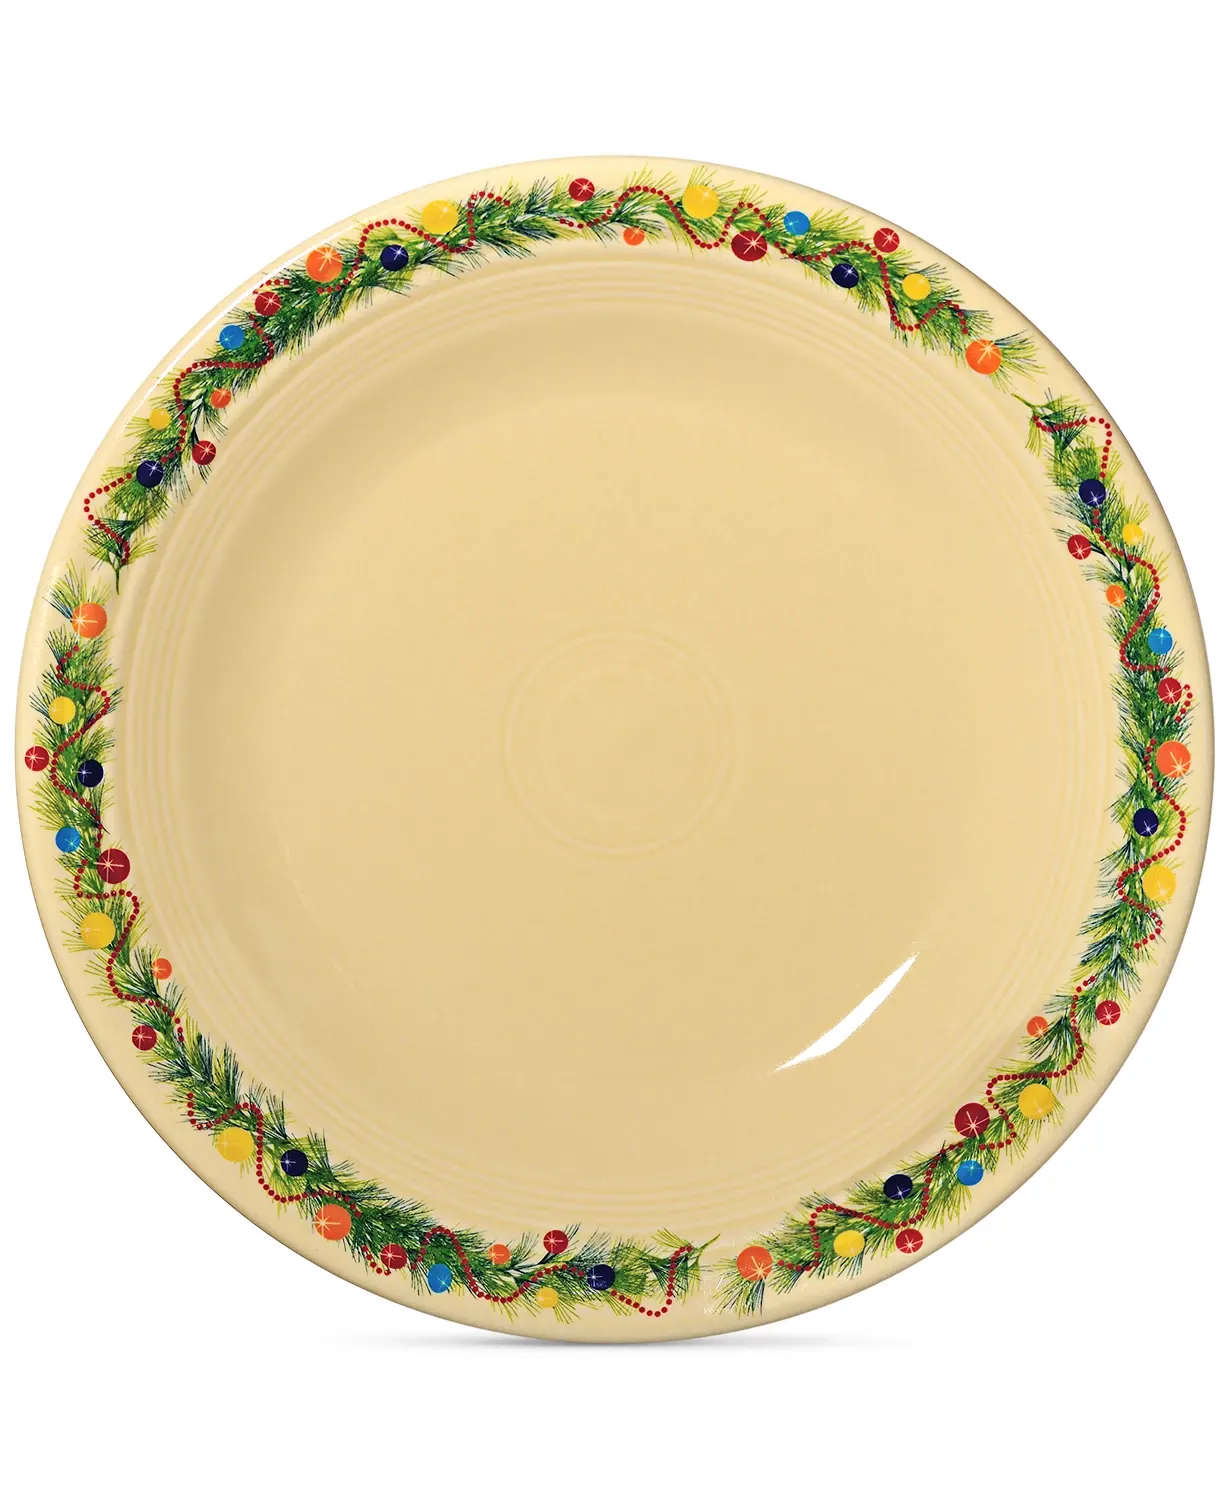 Fiestaware White Tree Plate Fiesta Holiday Christmas 10 inch Serving Platter 